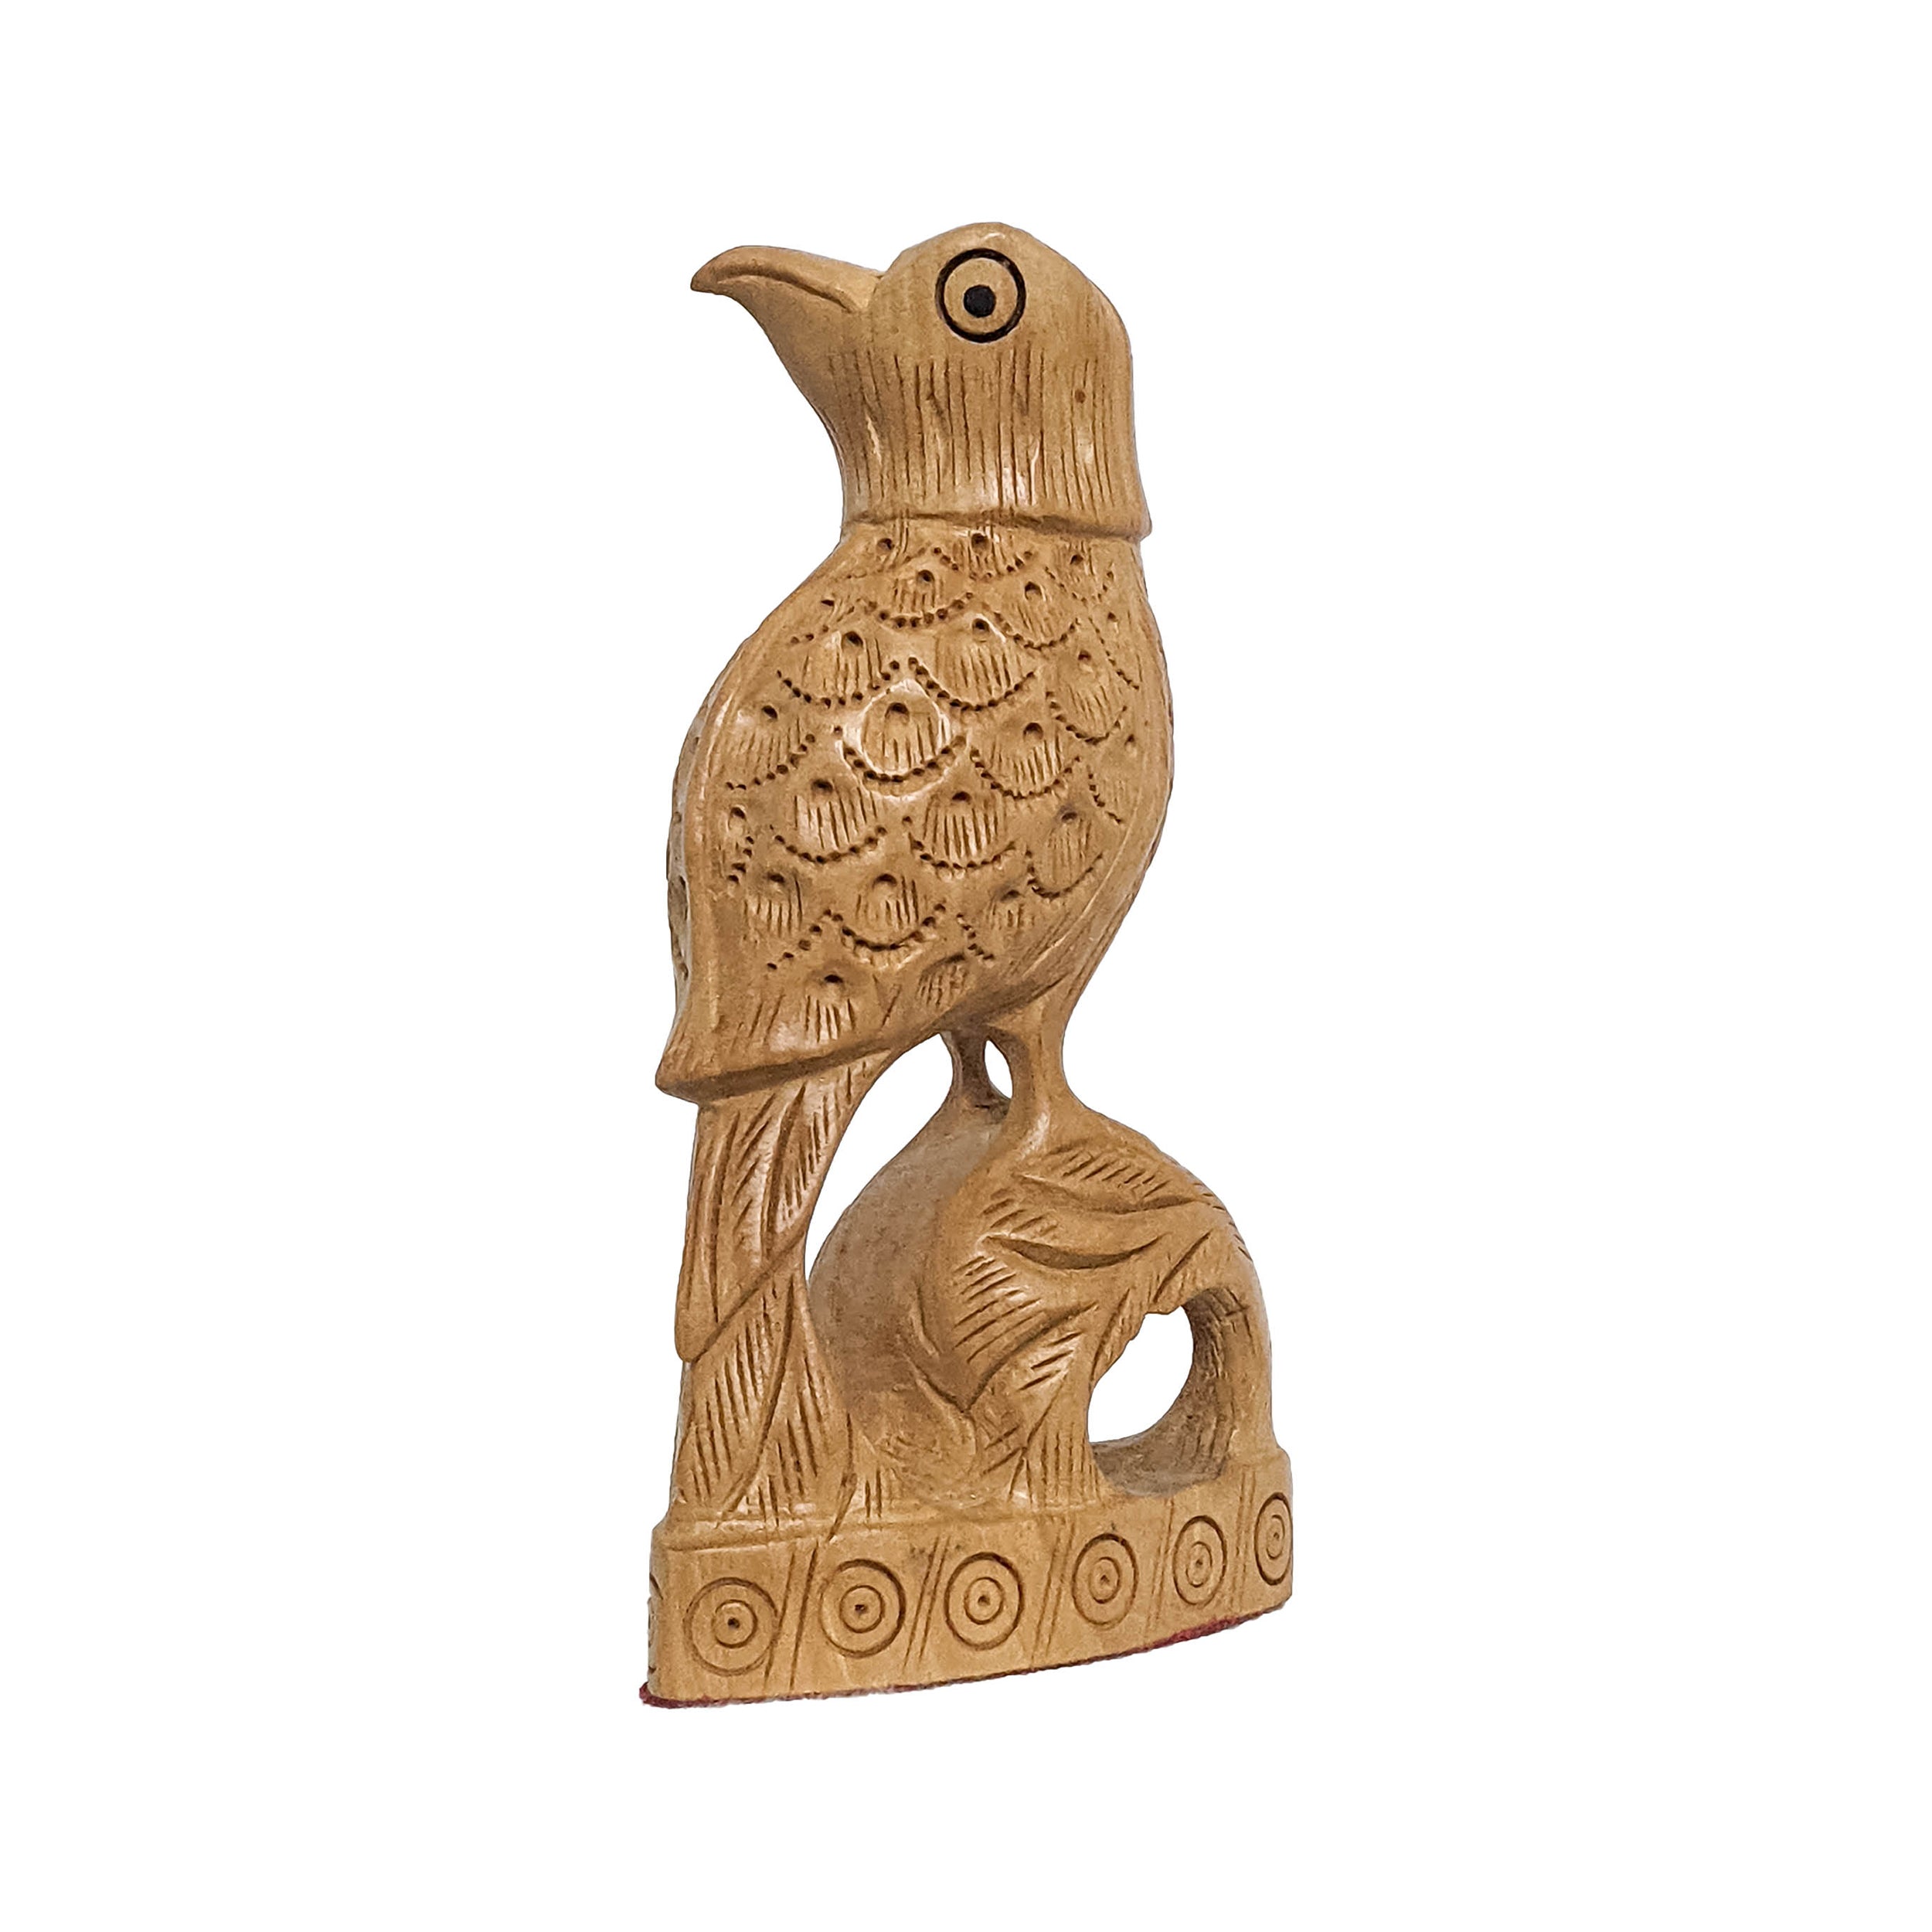 Wooden Bird Sculptures for Home Decor